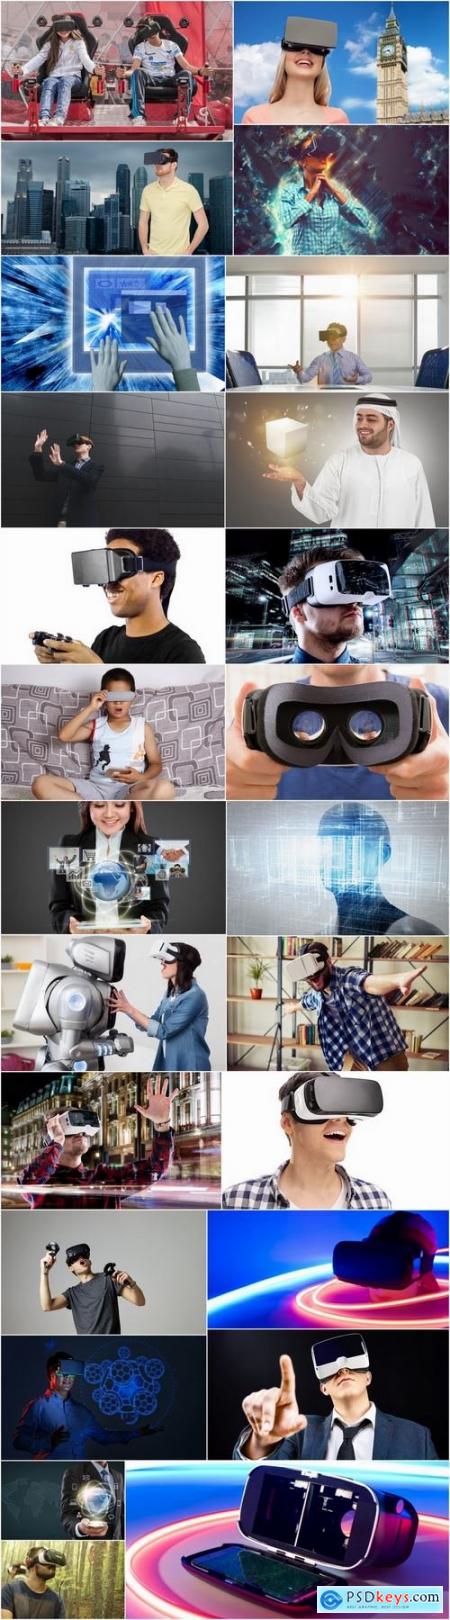 Virtual reality 3D glasses IT entertainment technology 25 HQ Jpeg